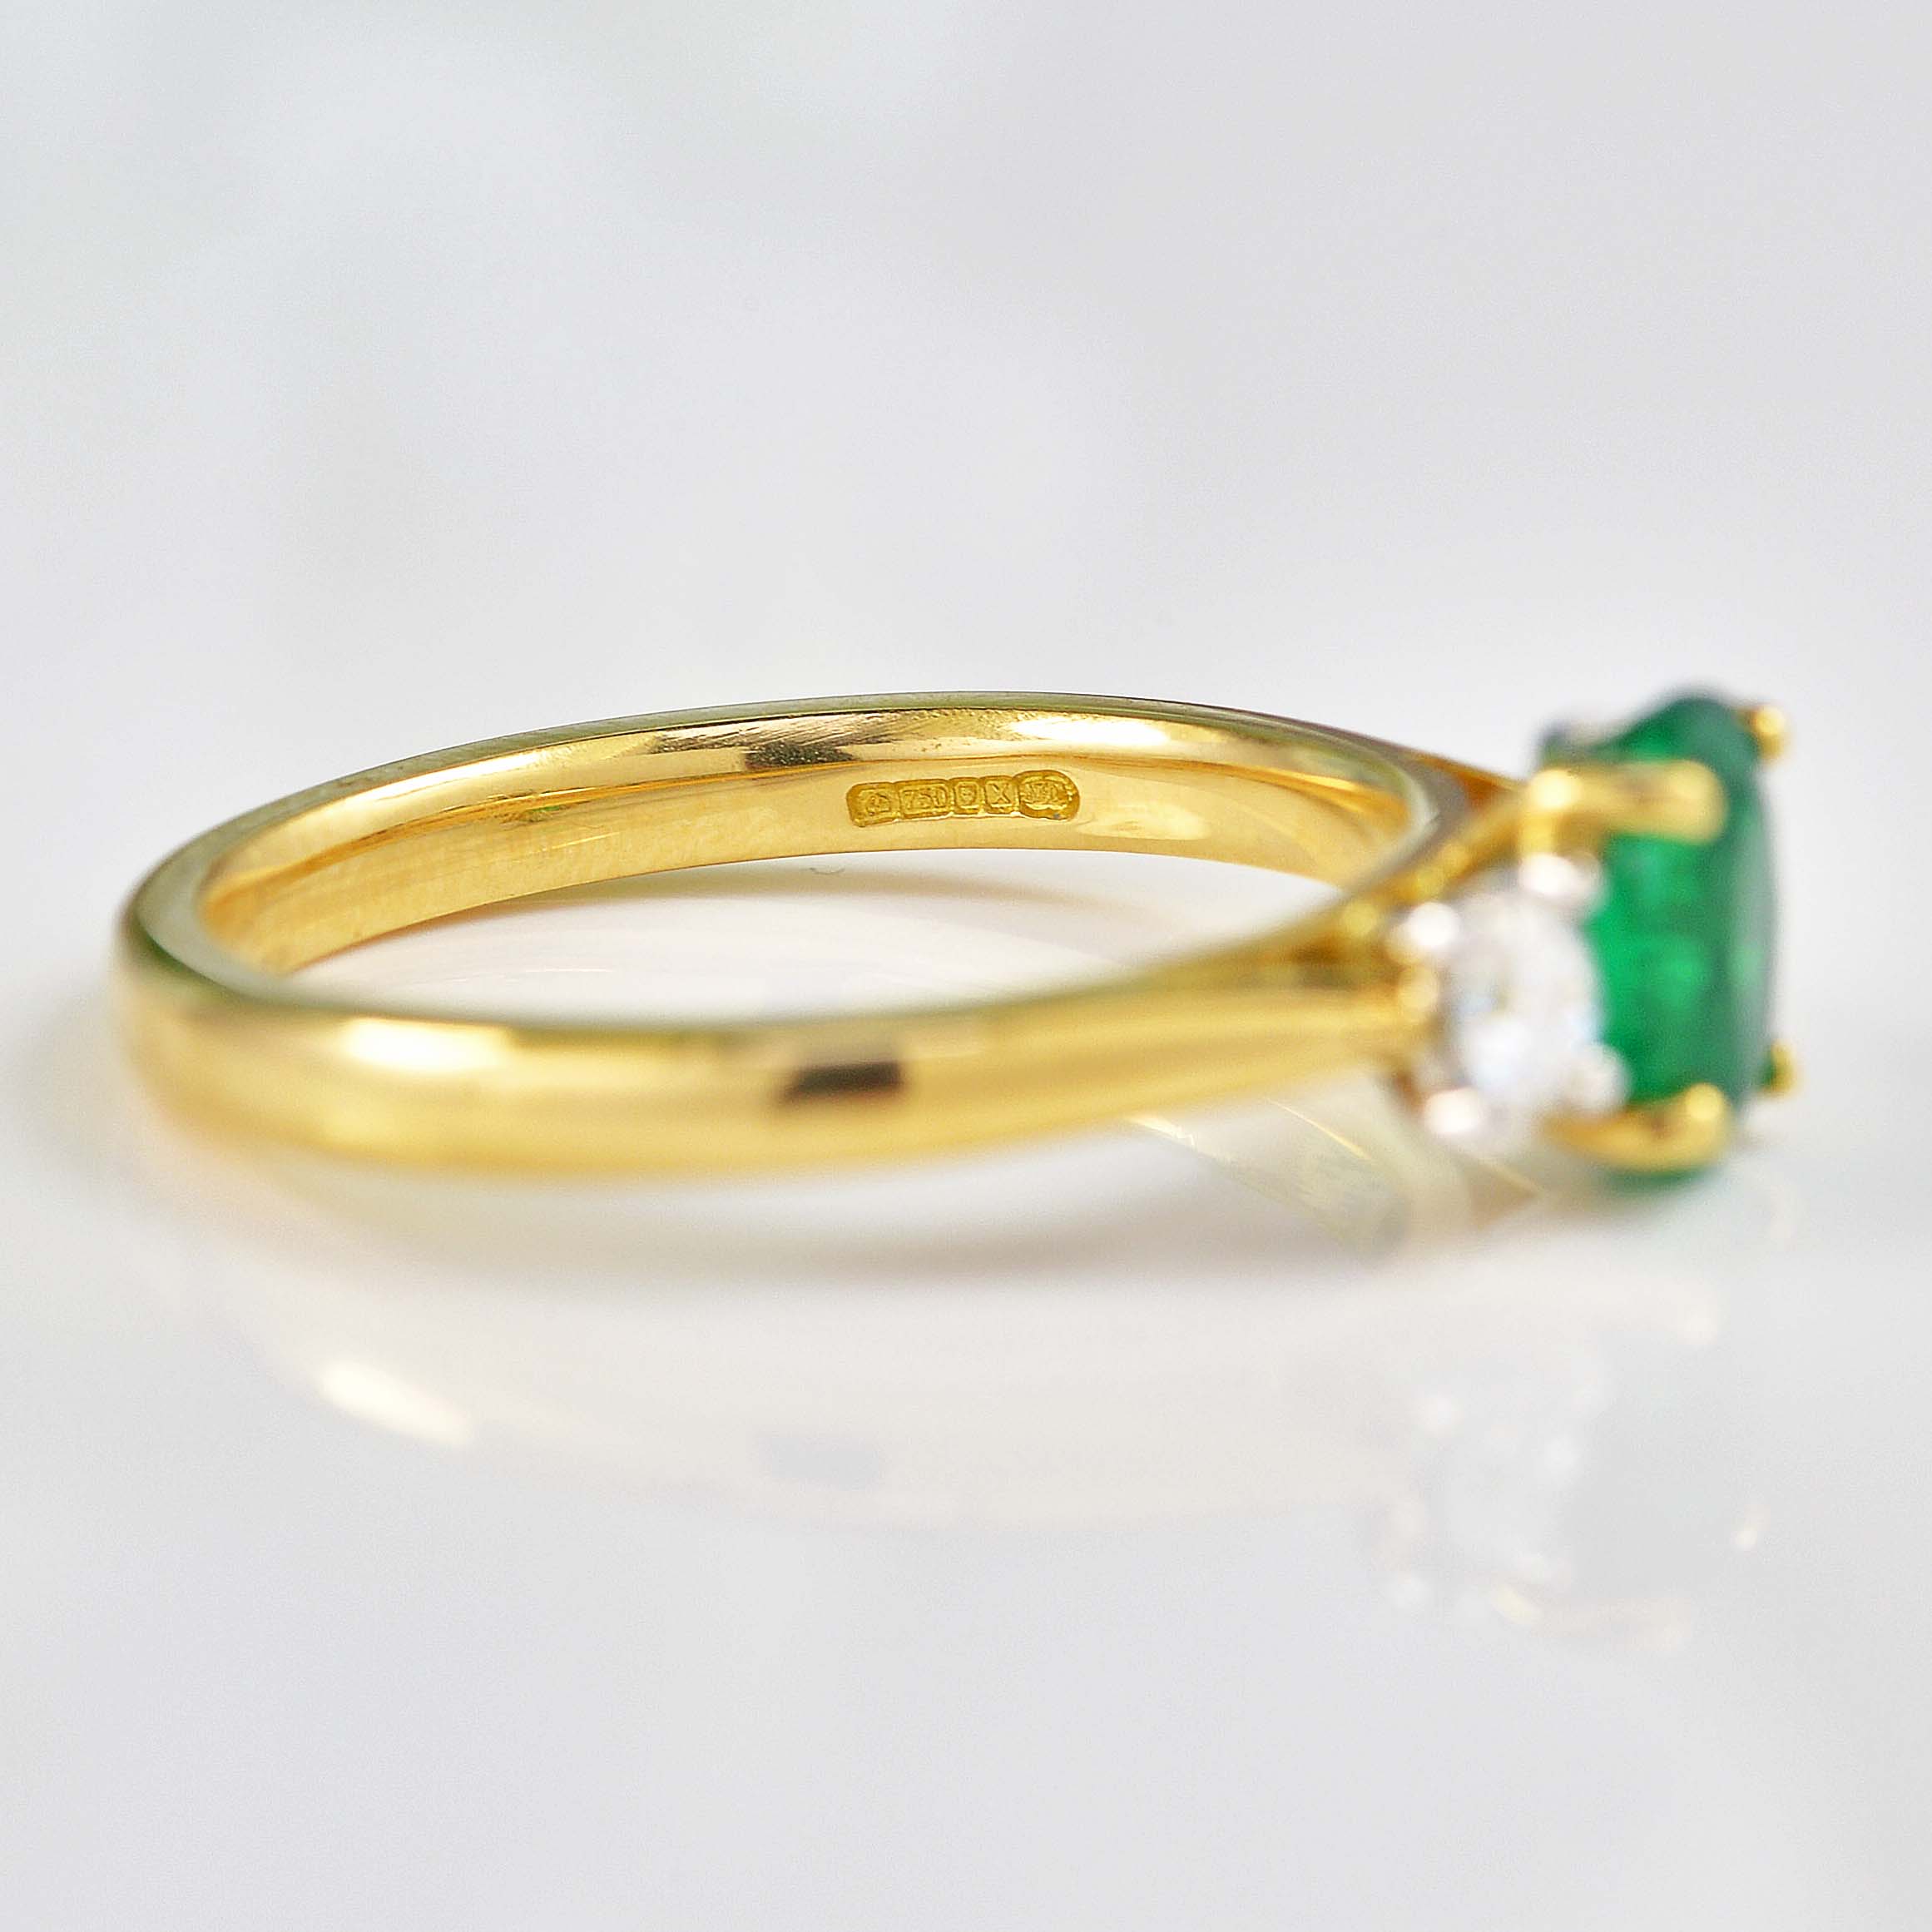 Ellibelle Jewellery Emerald & Diamond 18ct Gold Oval Three-Stone Engagement Ring (0.83ct)